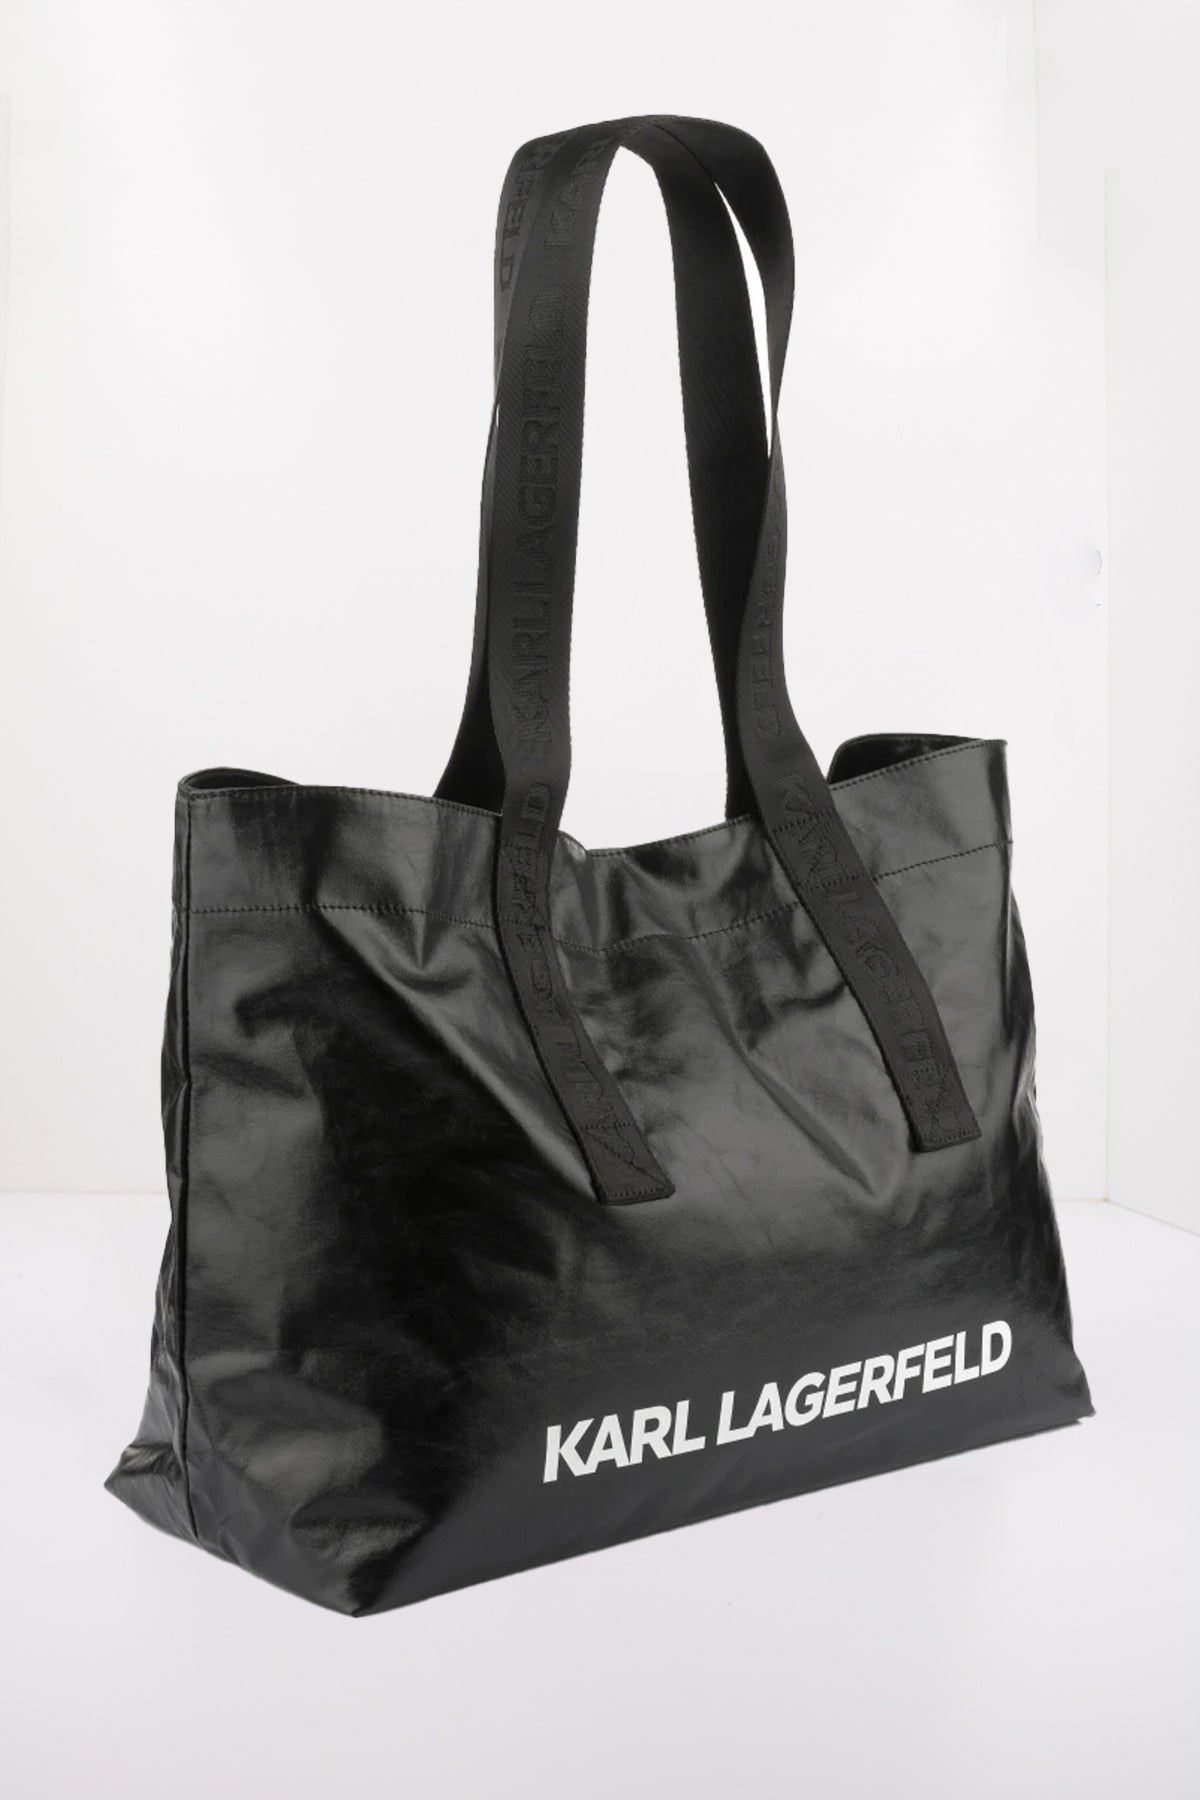 KARL LAGERFELD K/ESSENTIAL COATED SHOPPER en color NEGRO  (1)